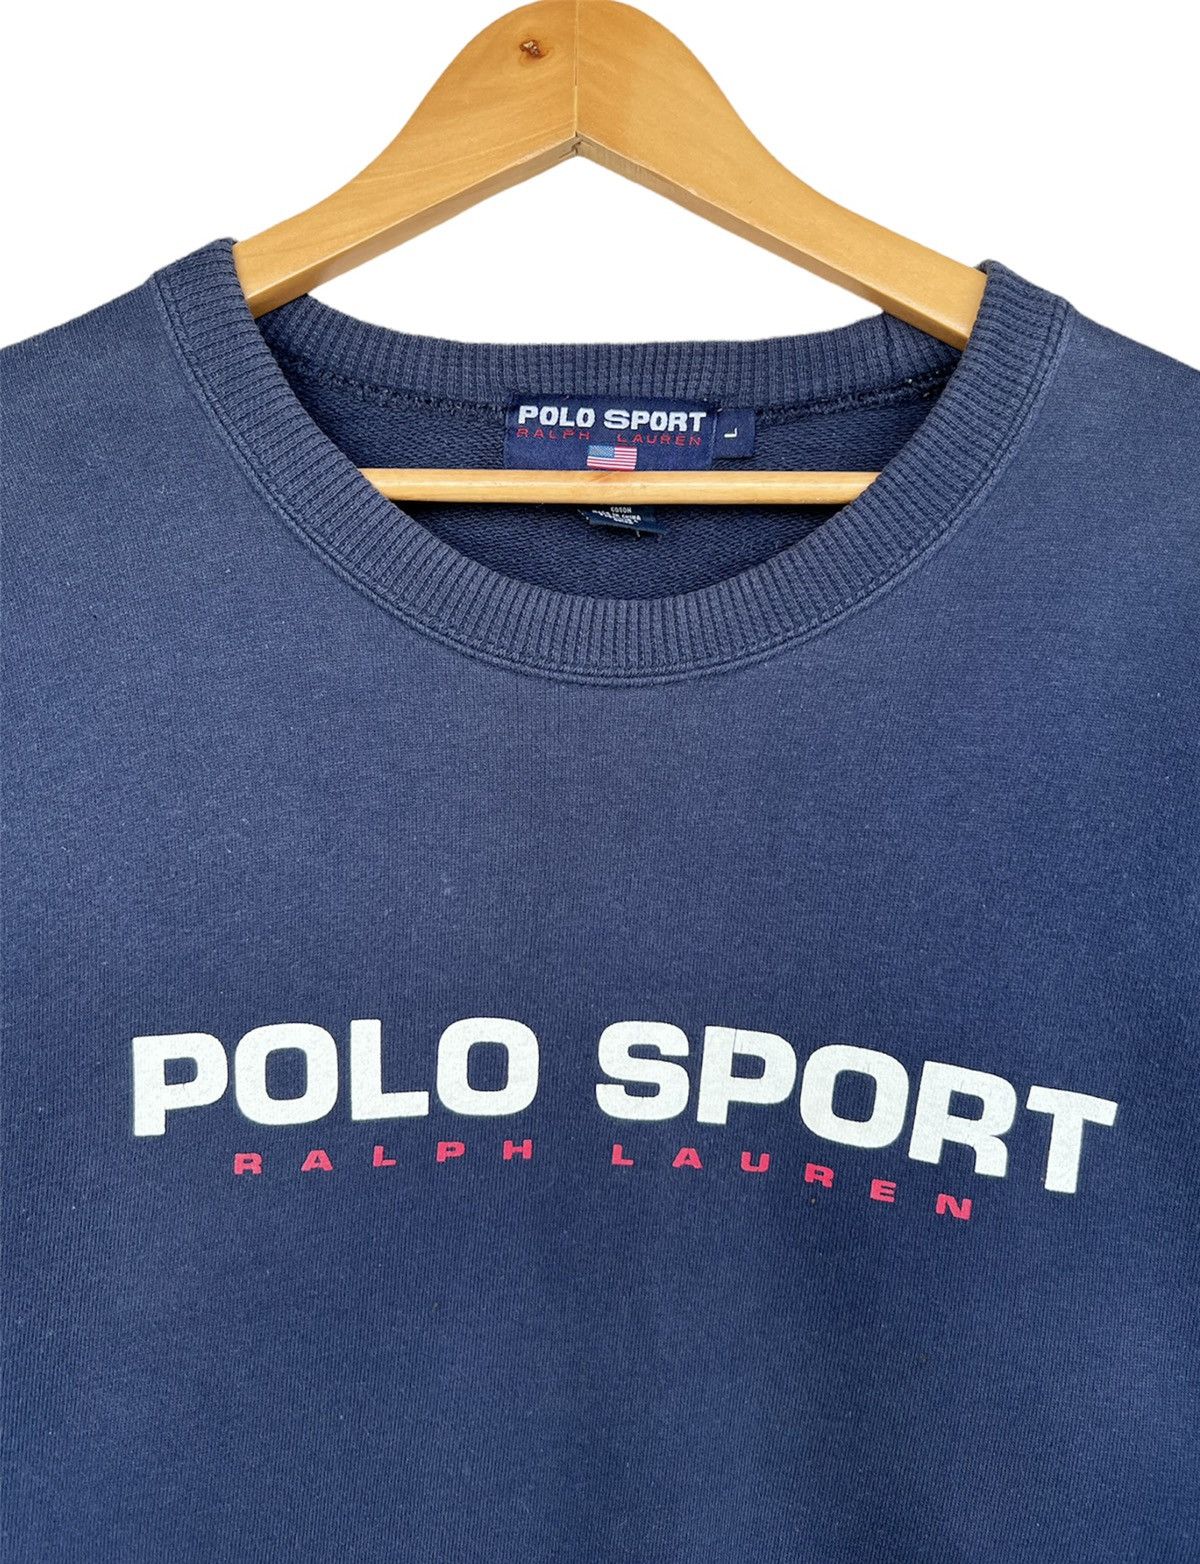 Polo Ralph Lauren - Vintage Polo Sport Ralph Lauren Spellout Sweatshirt Large - 4